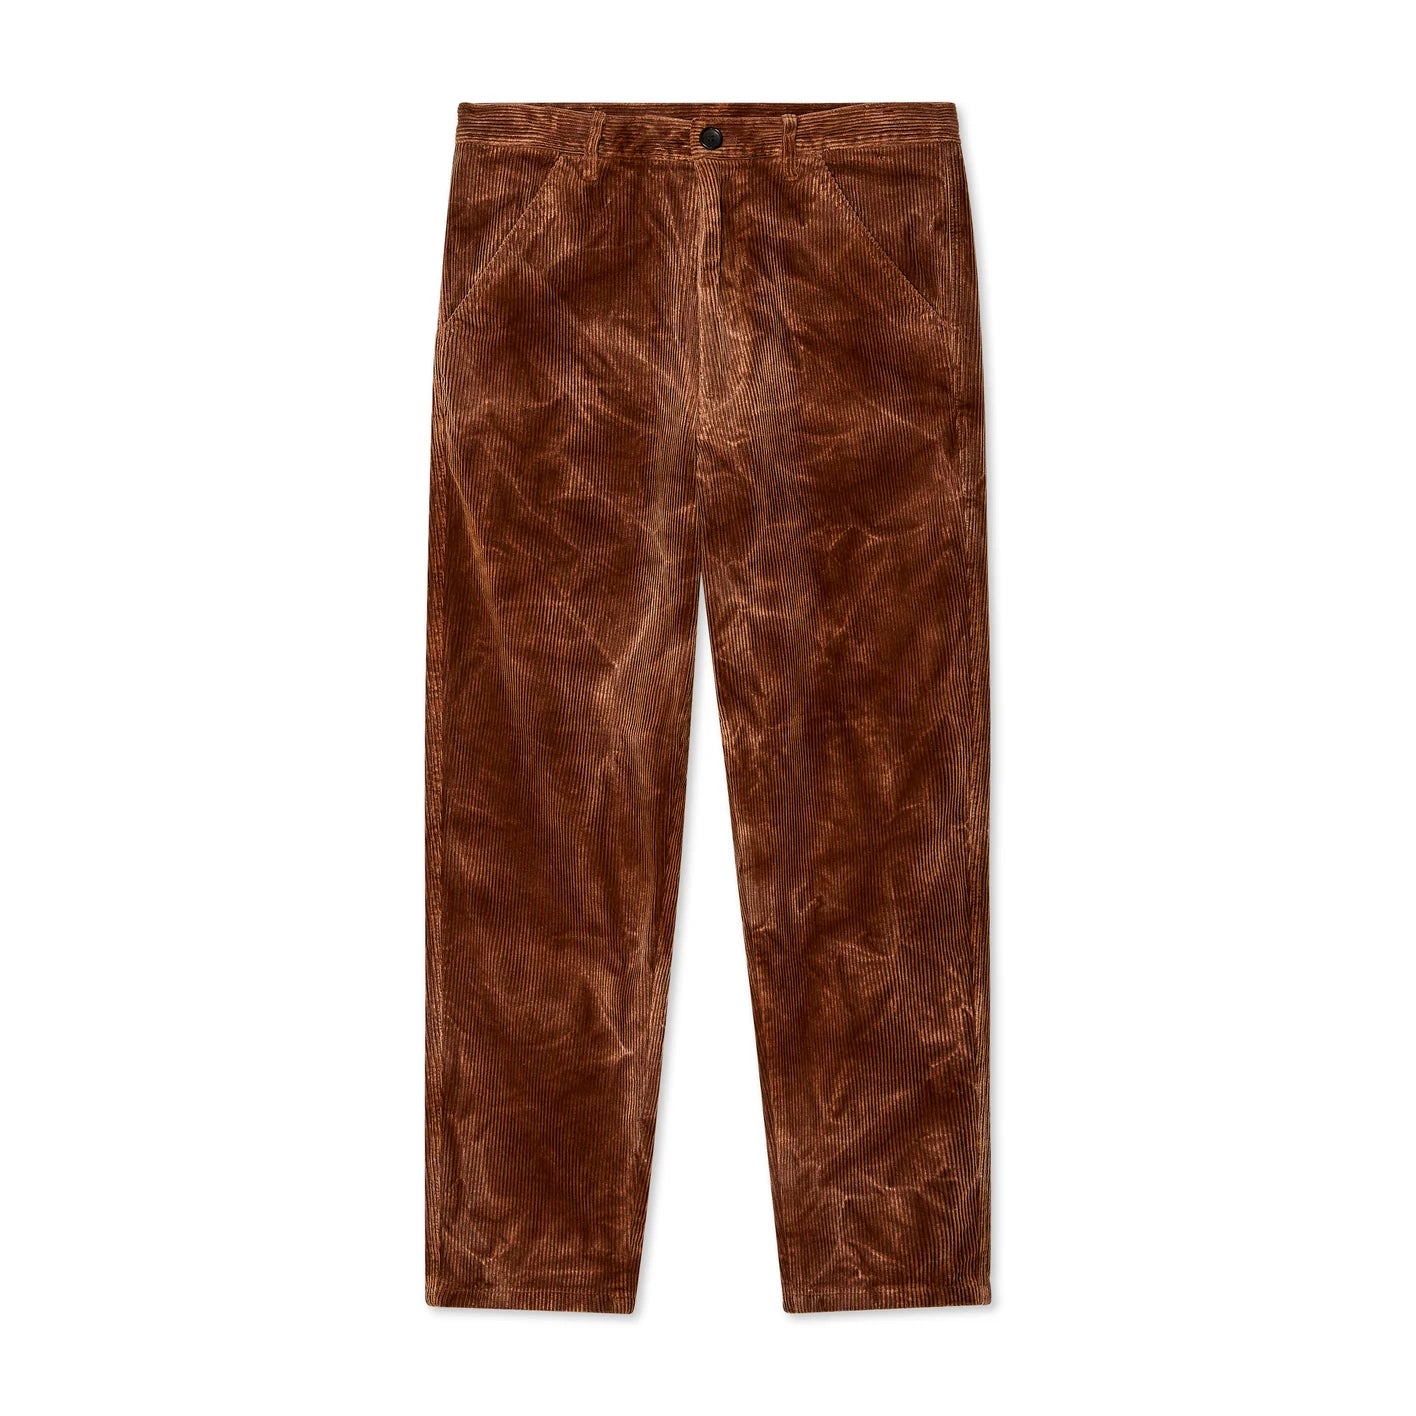 CDG Shirt - Men's Pants - (Brown) view 1